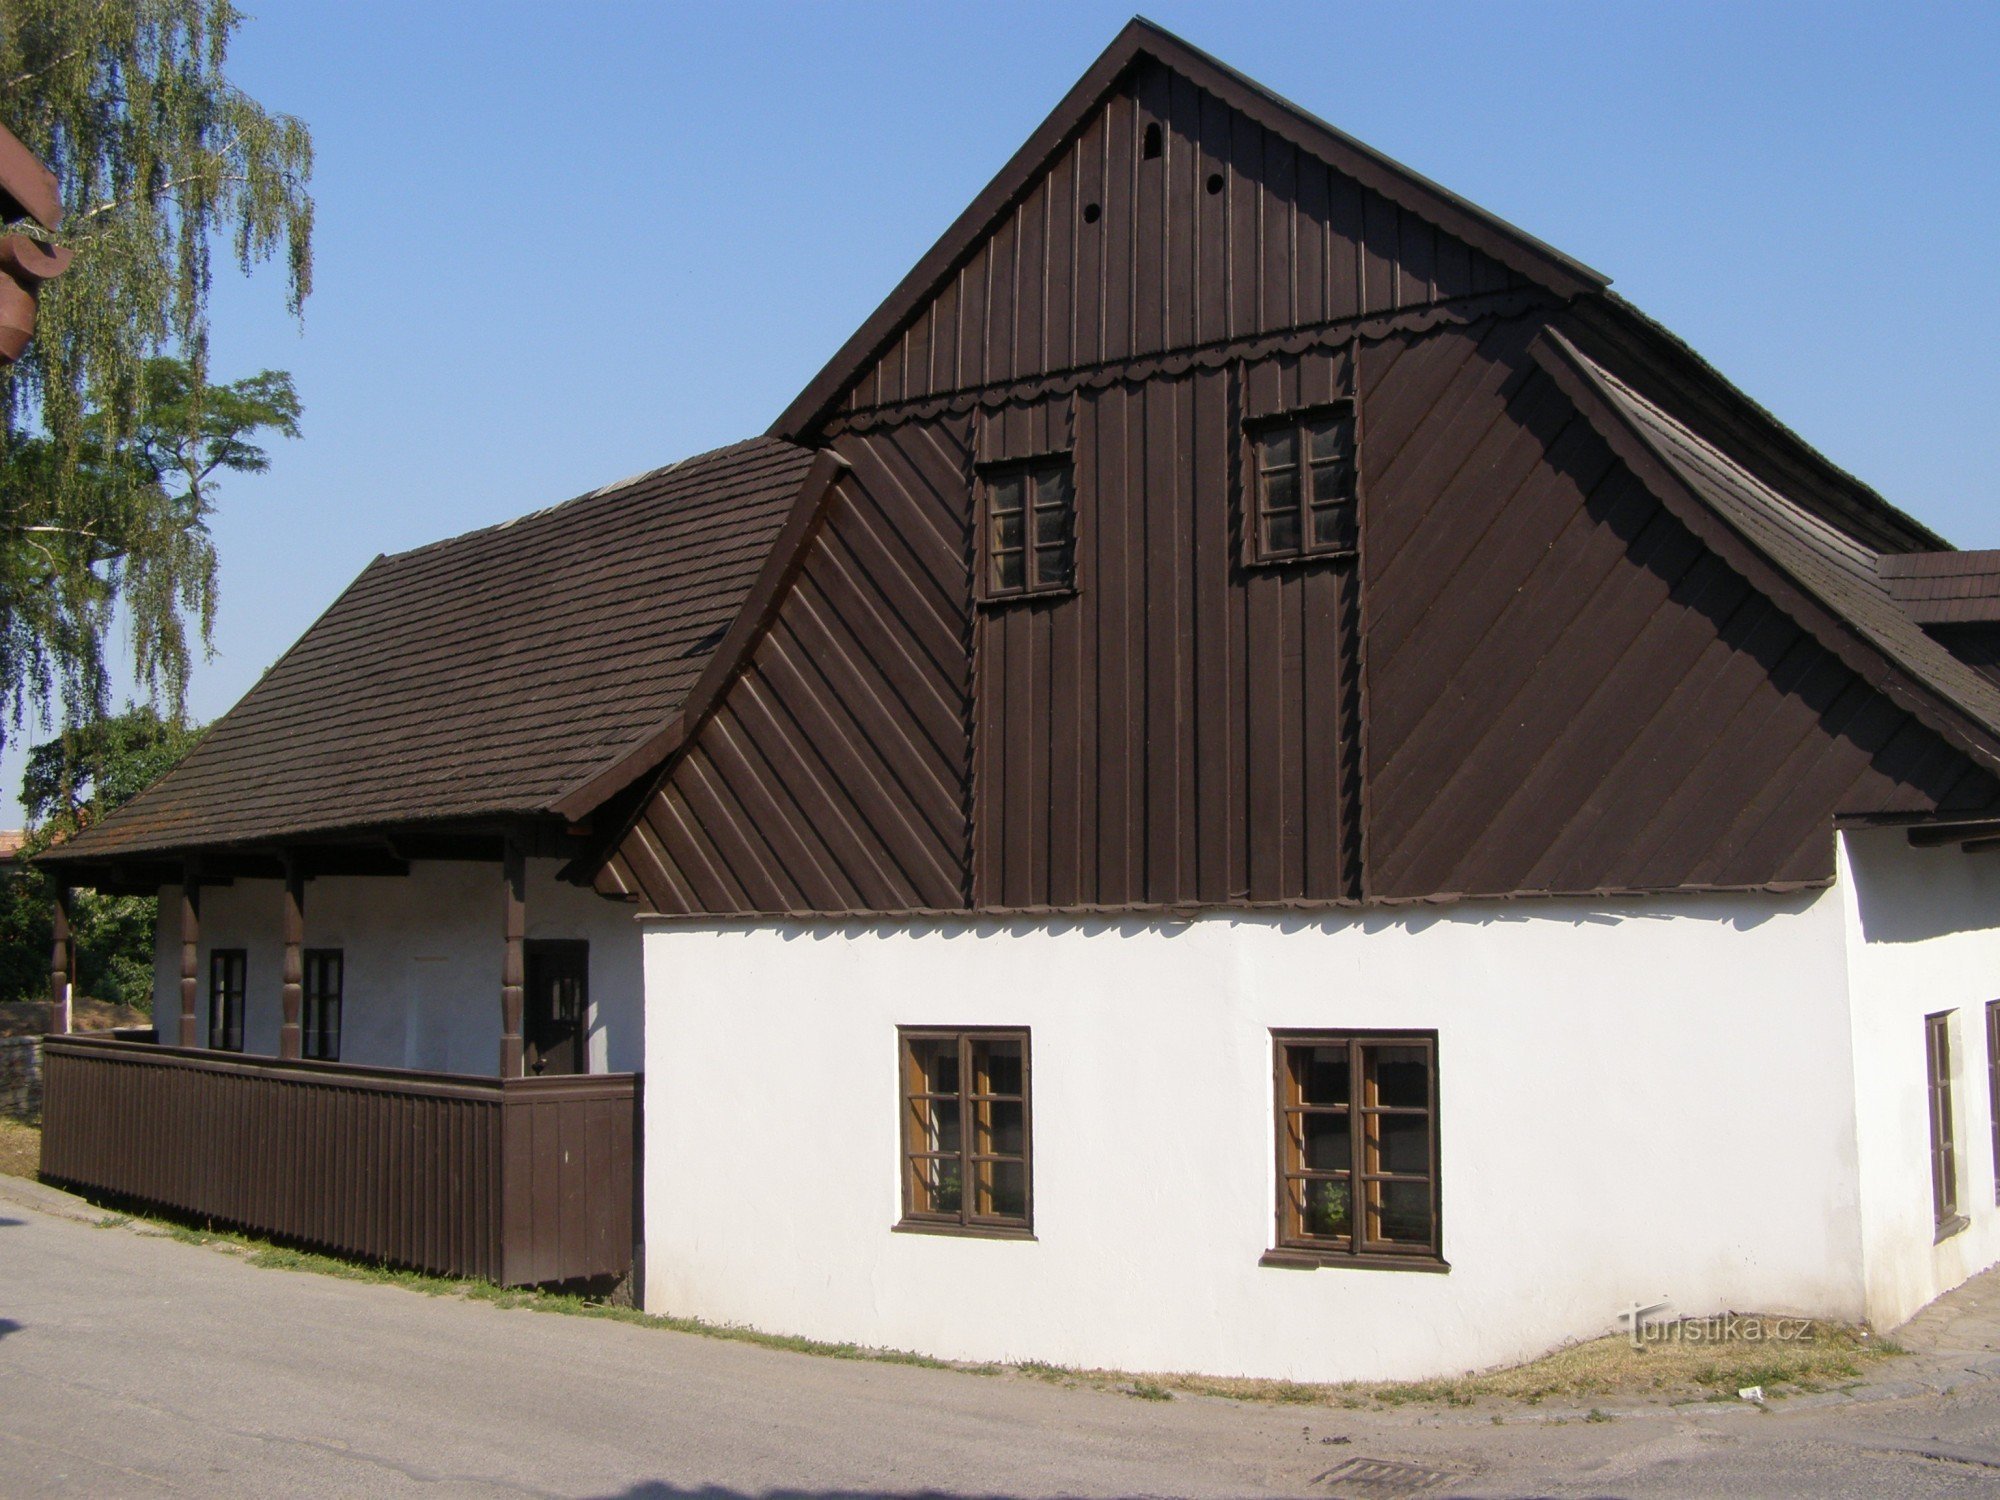 Dobruška - fødestedet for FLVěk (Heka)